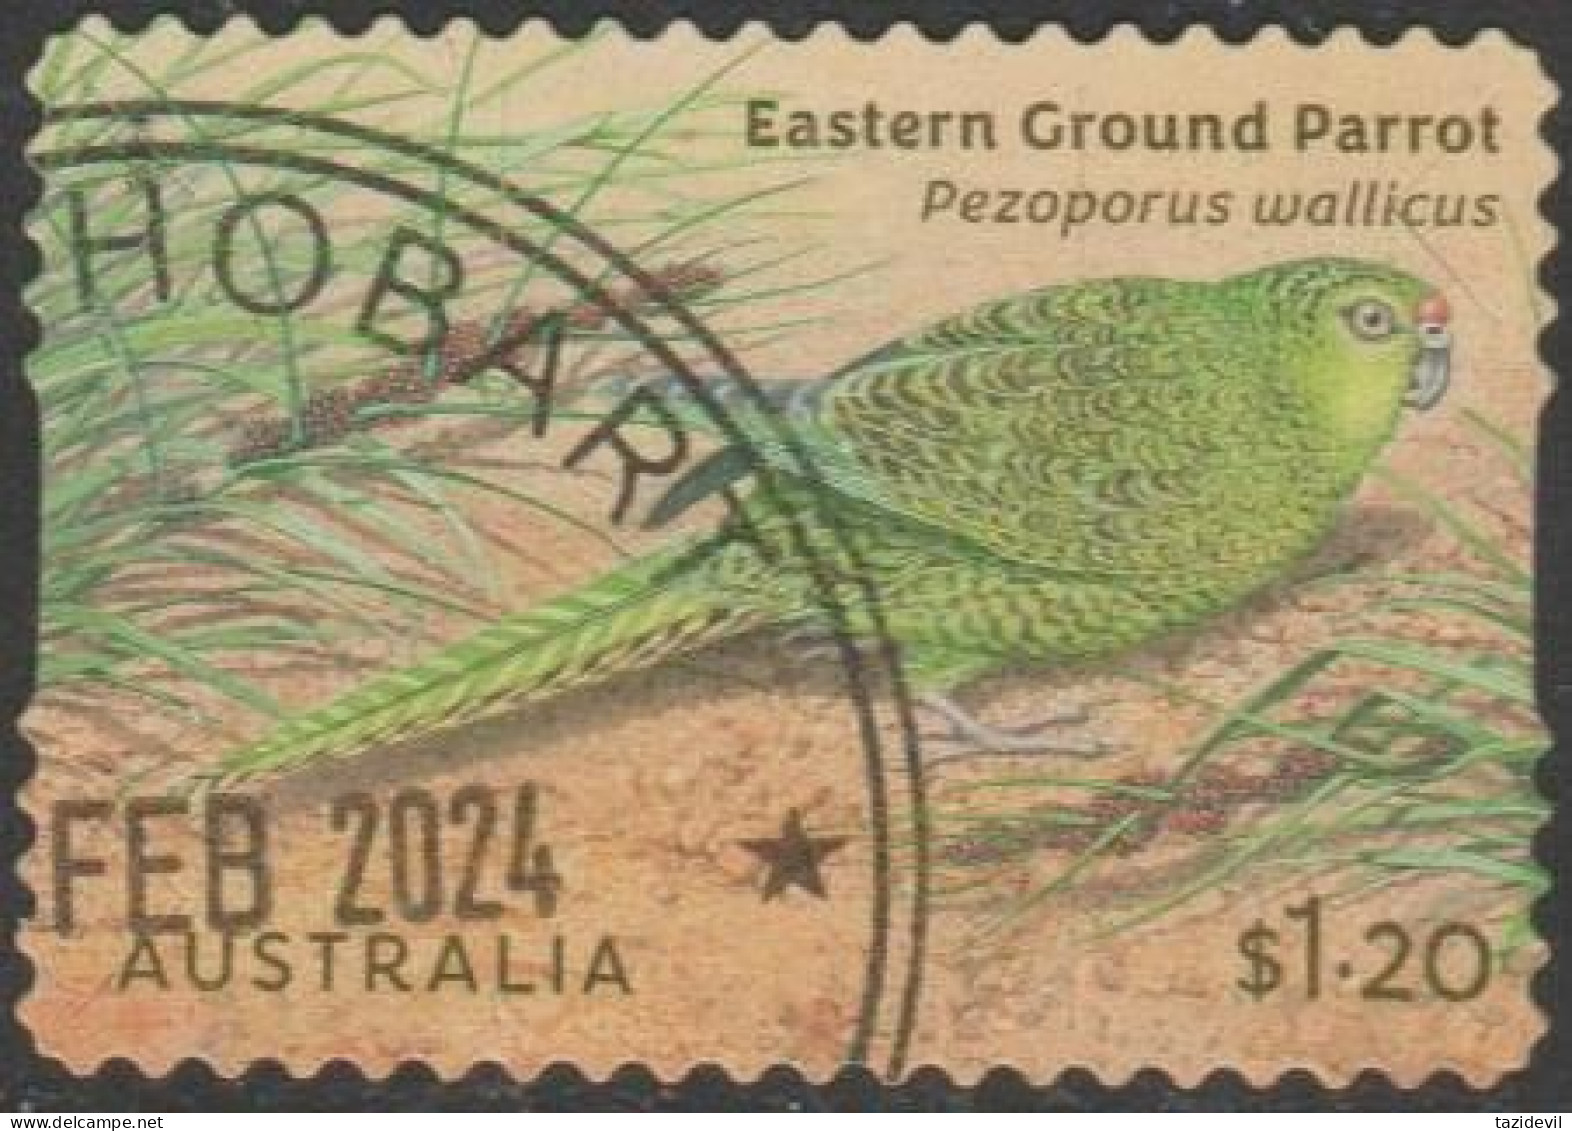 AUSTRALIA - DIE-CUT-USED 2024 $1.20 Australian Ground Parrots - Eastern Ground Parrot - Gebruikt